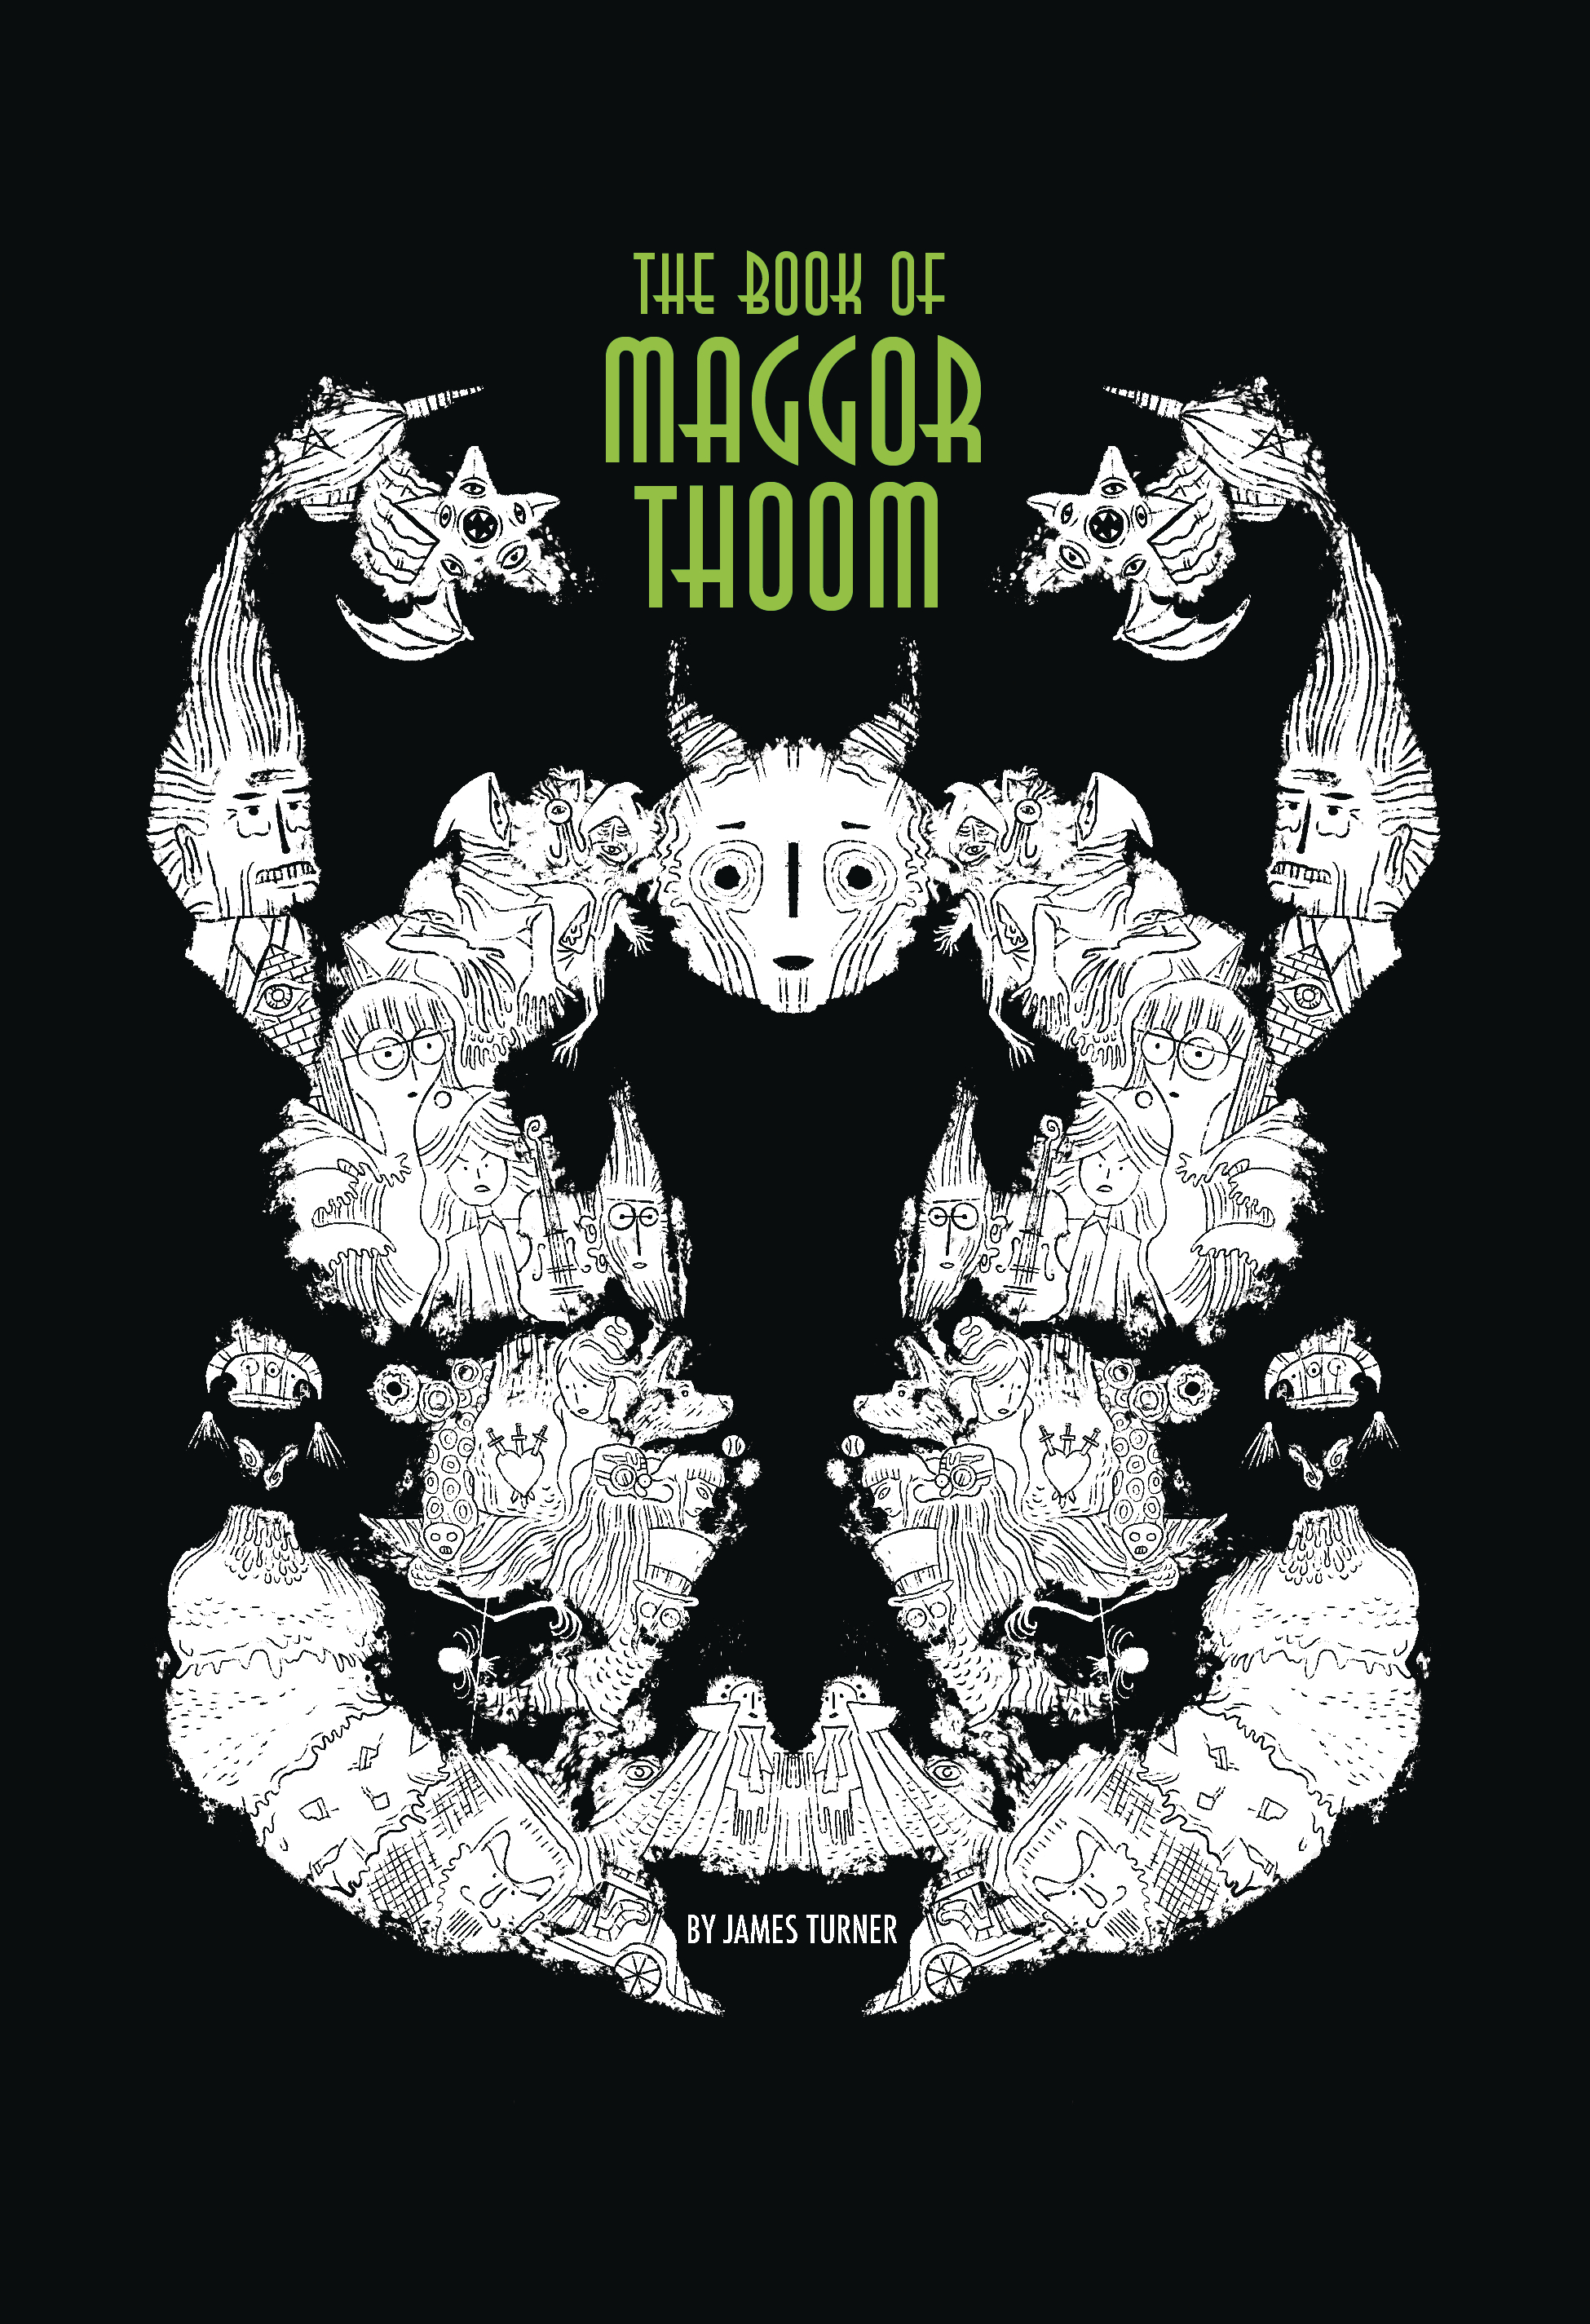 Book of Maggor Thoom Graphic Novel